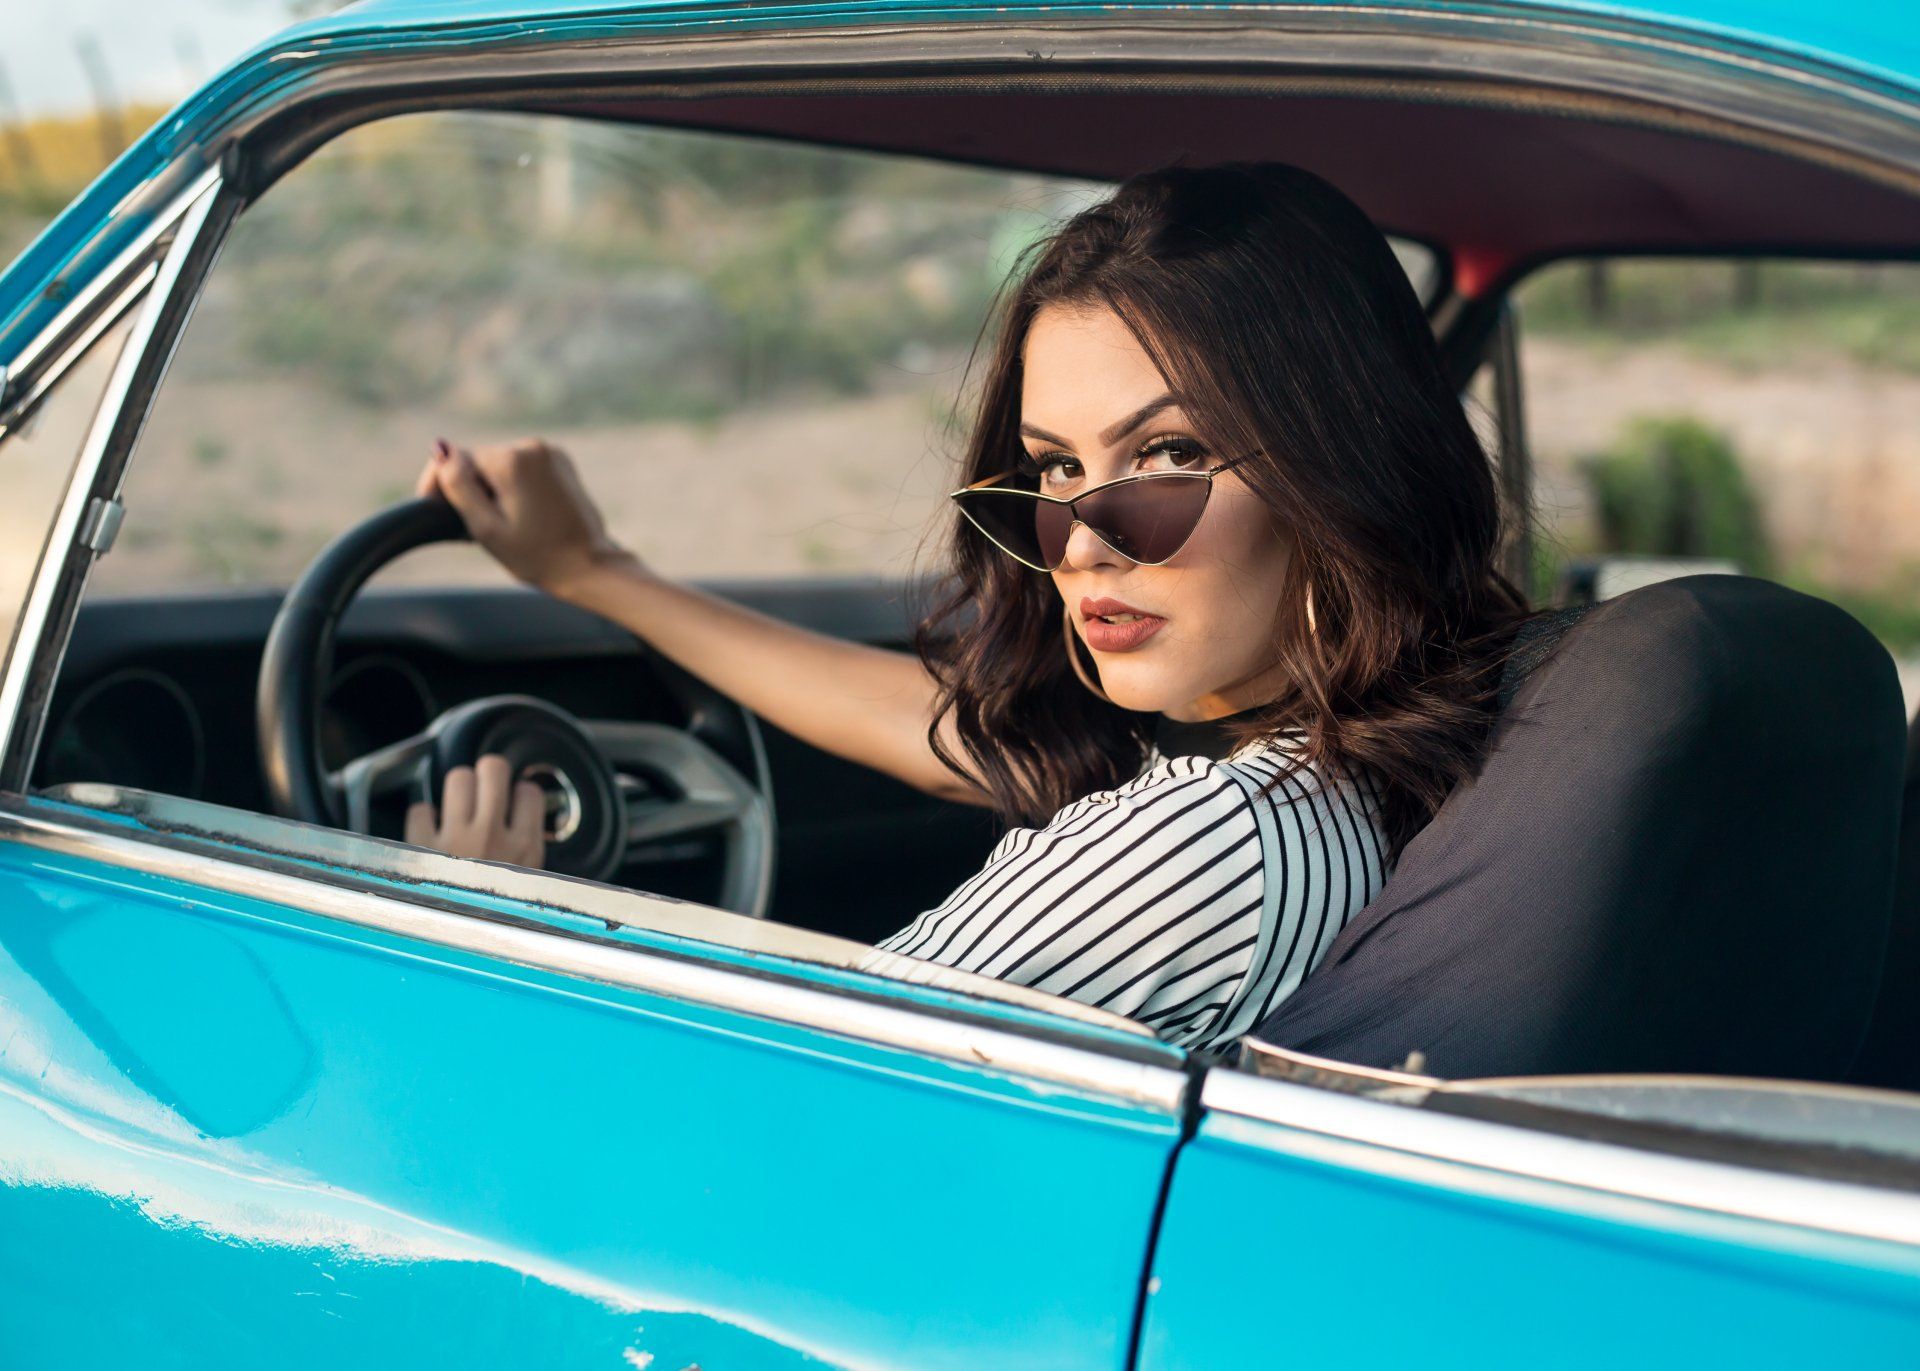 Woman in blue car wearing sunglasses